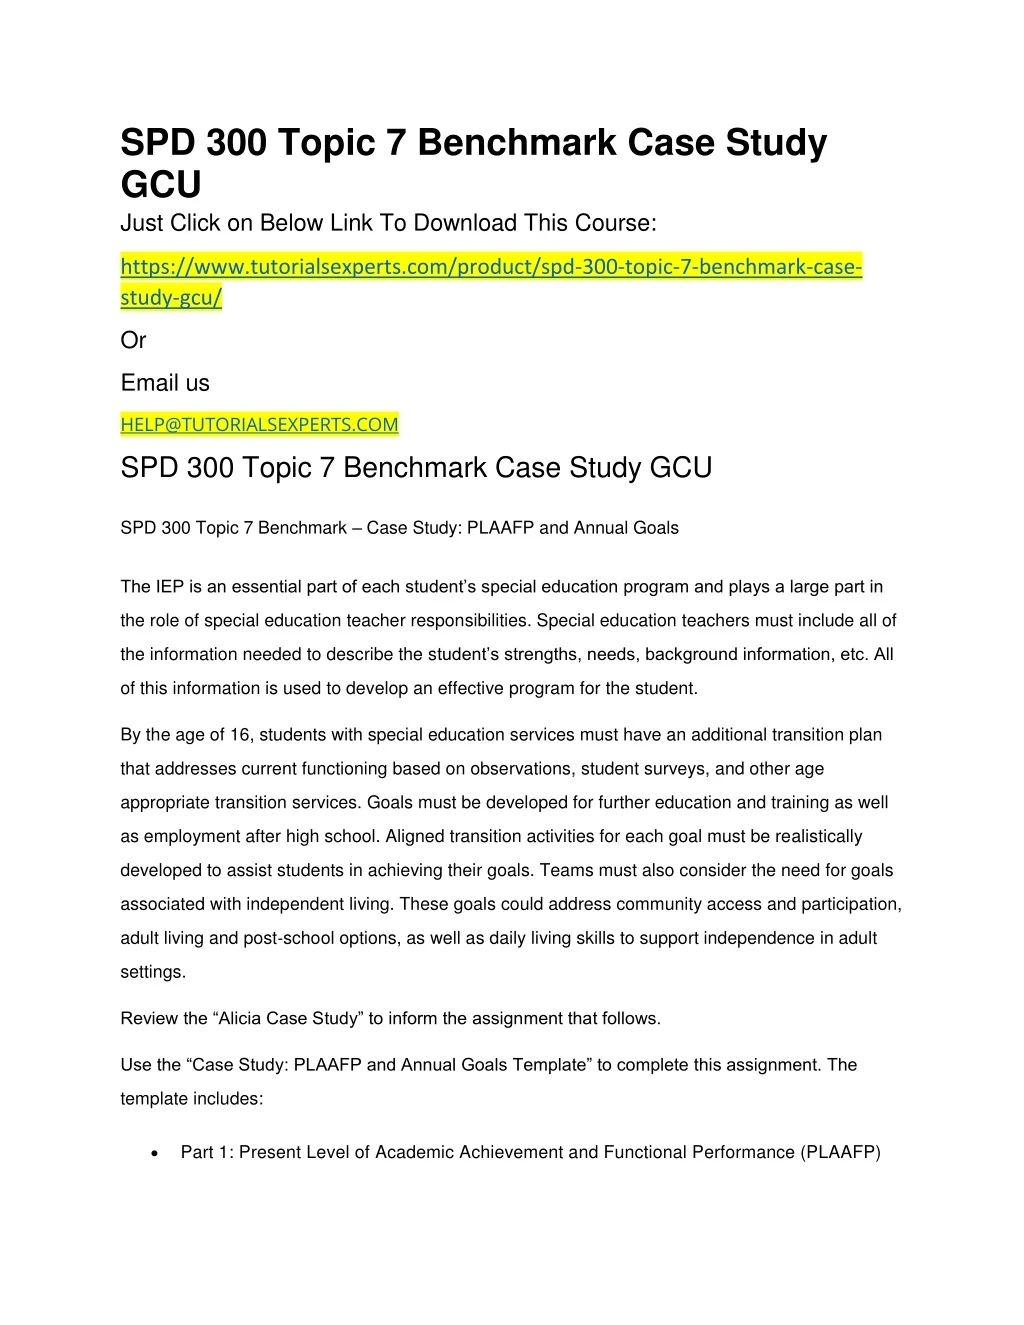 spd 300 topic 7 benchmark case study gcu just